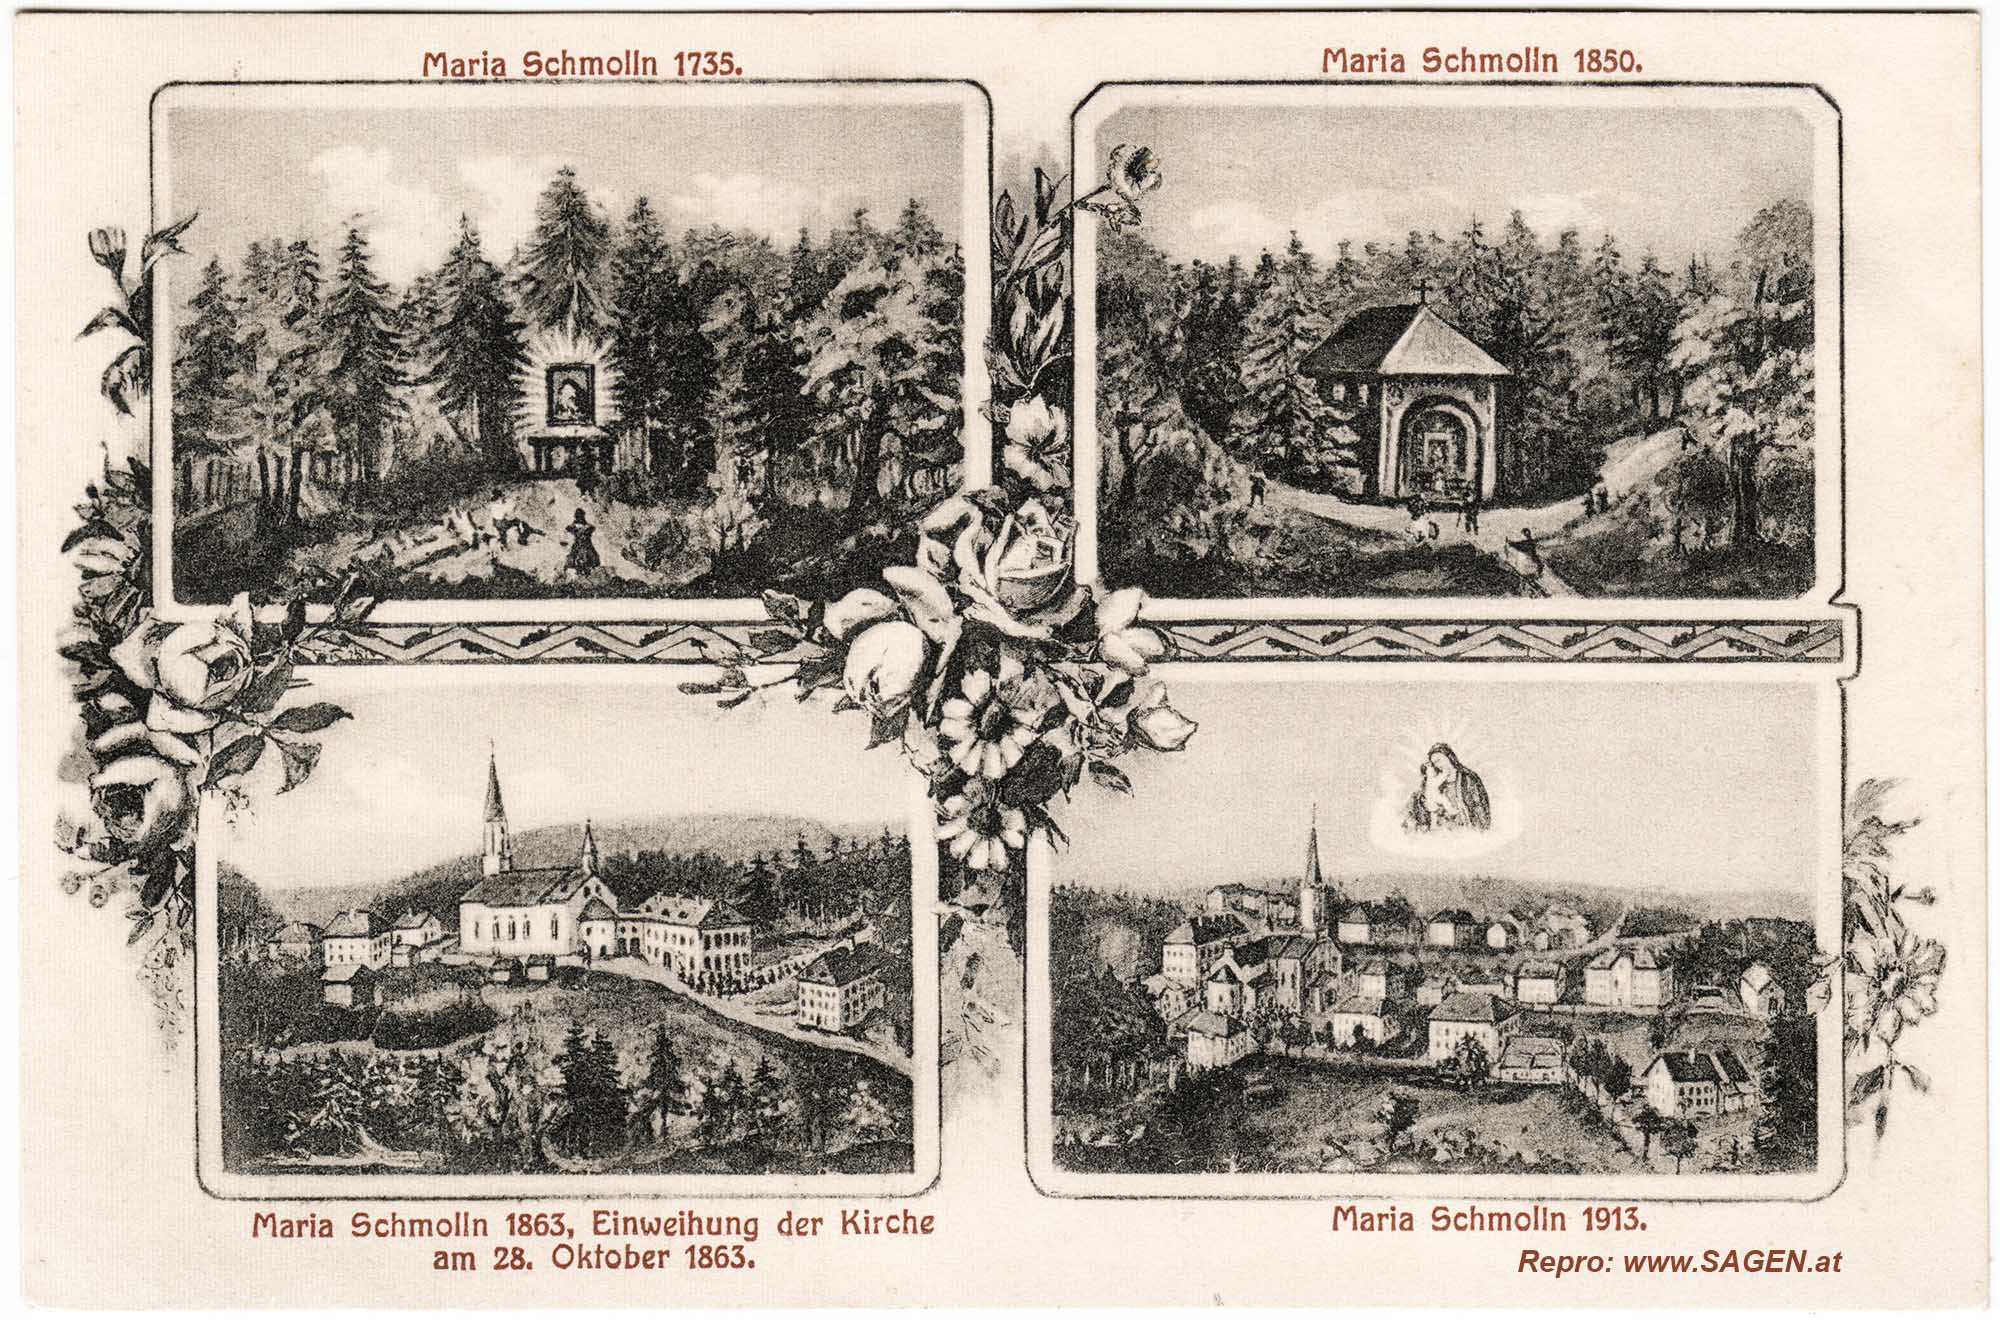 Maria Schmolln Jubiläumskarte 1863 - 1913